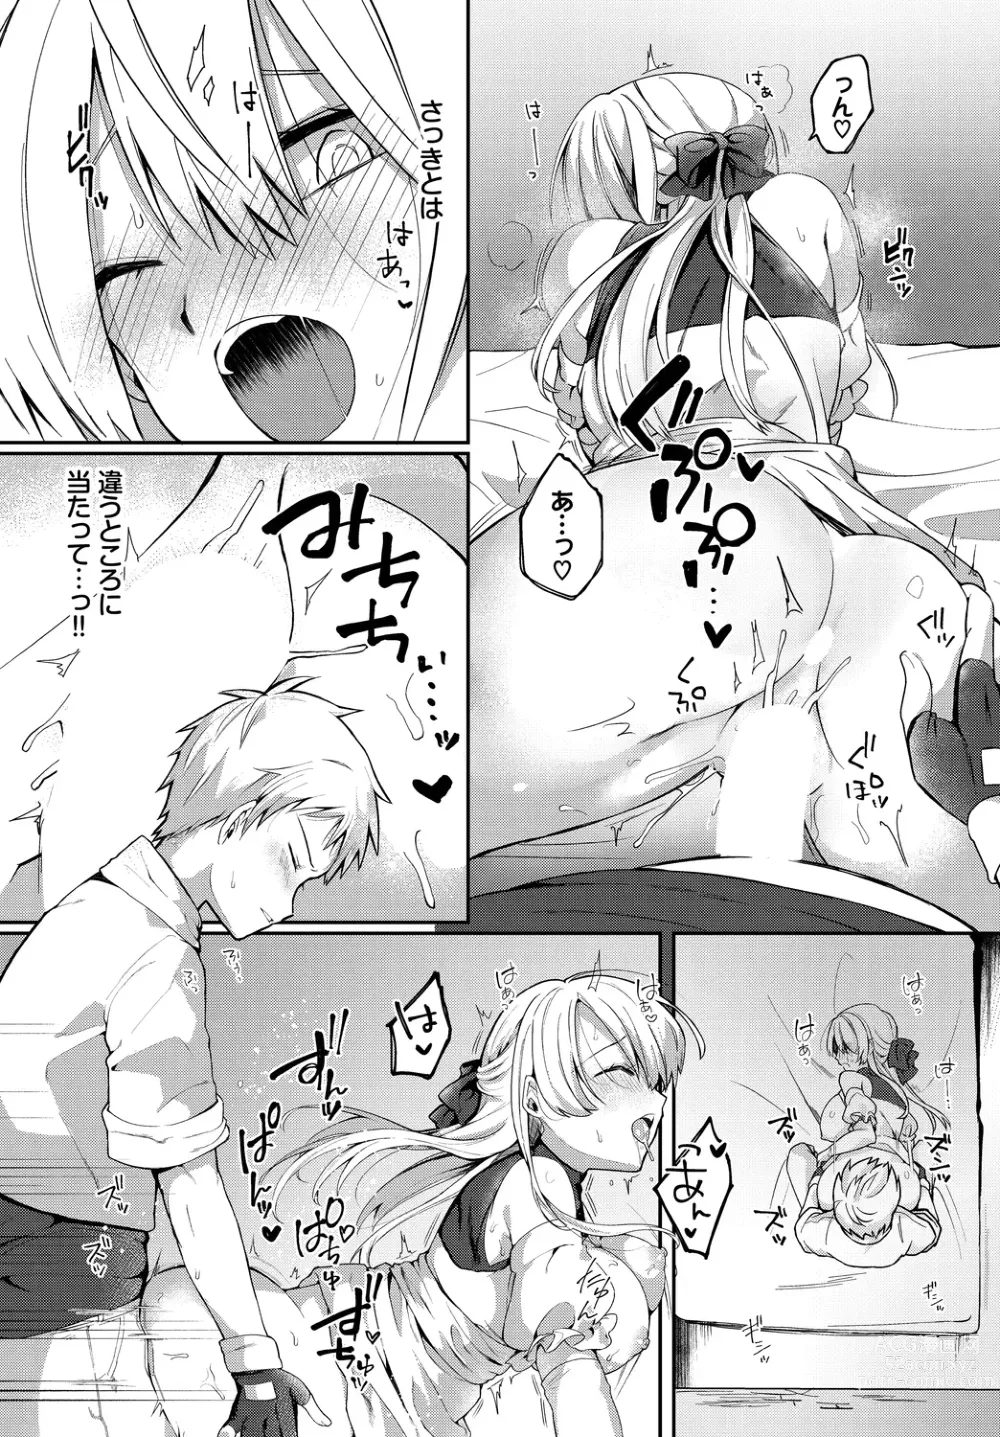 Page 16 of manga Koi-in Rhapsody